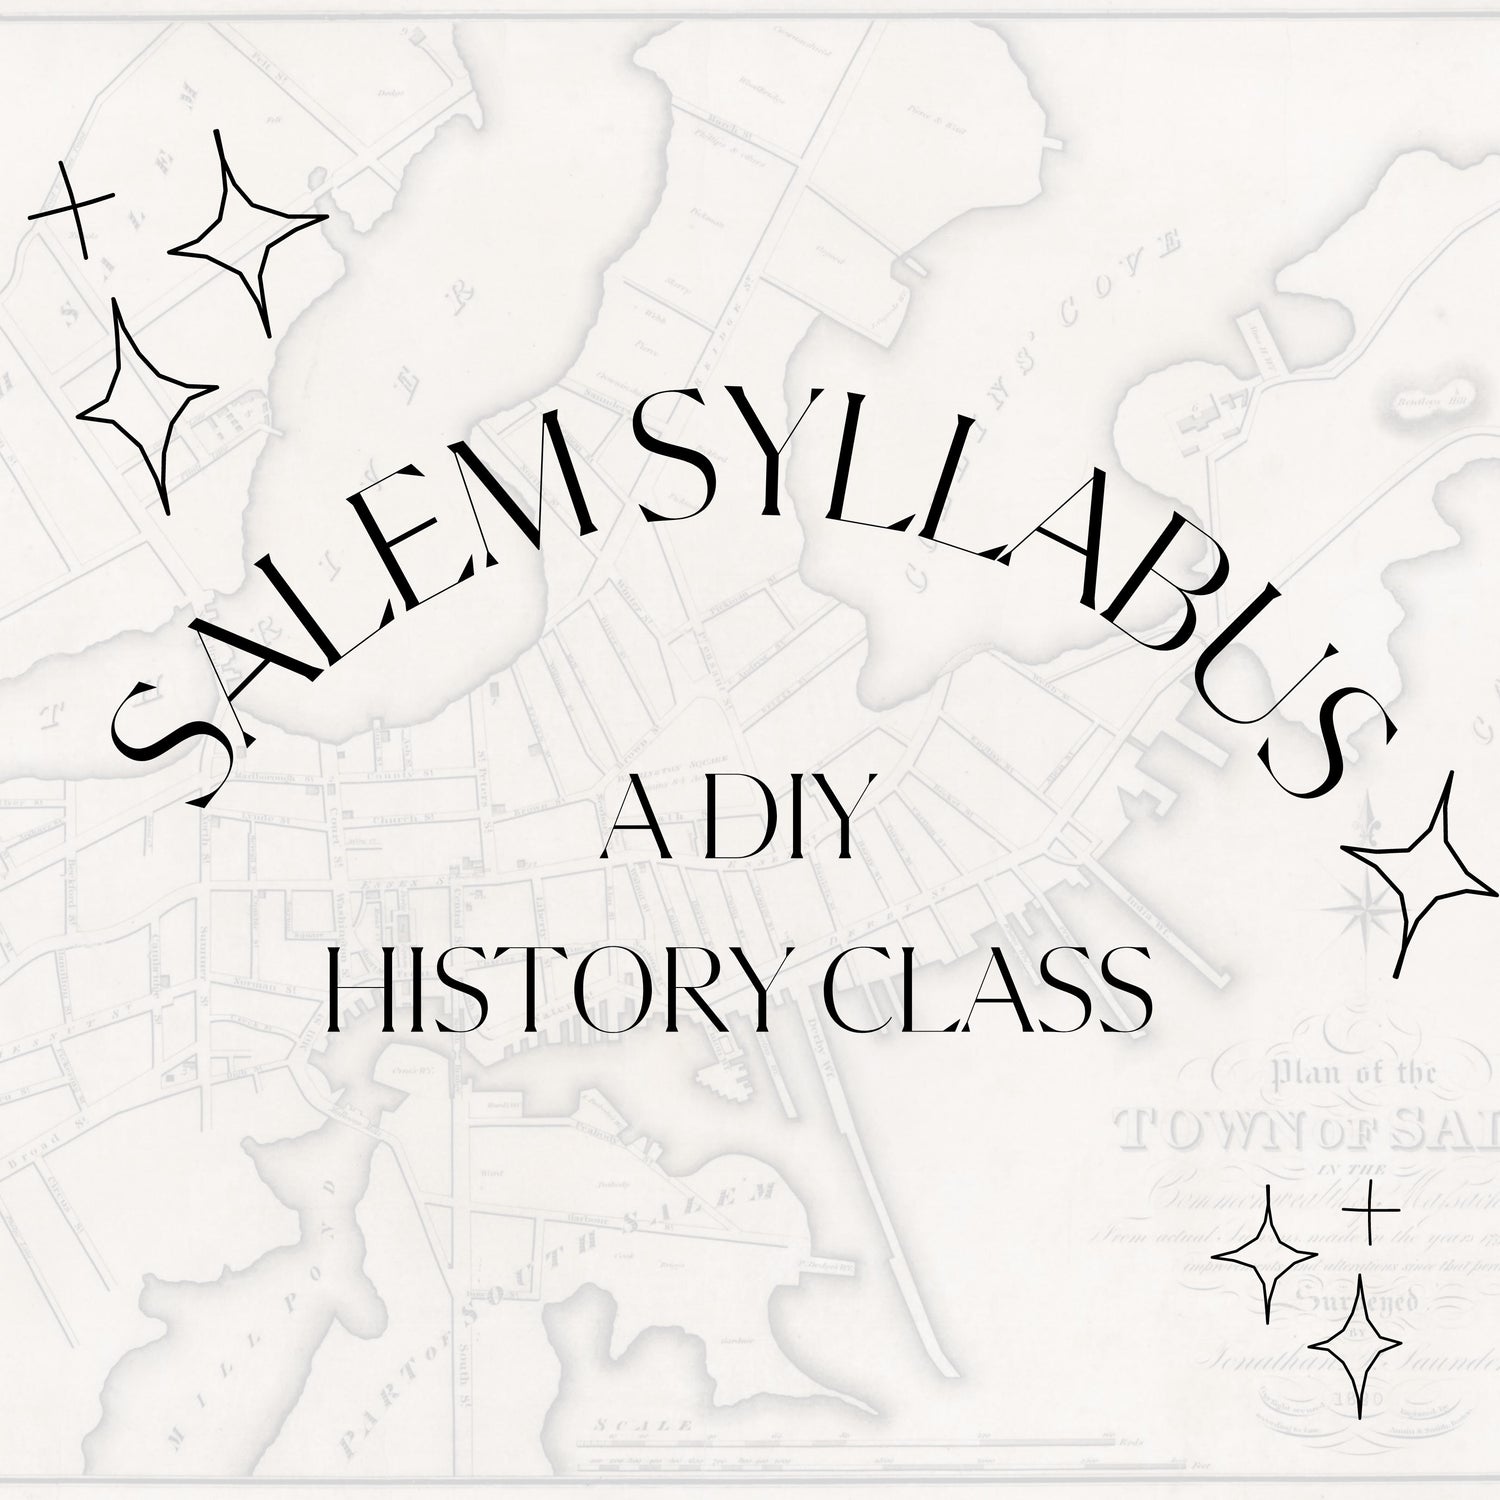 Salem Syllabus: A DIY History Class